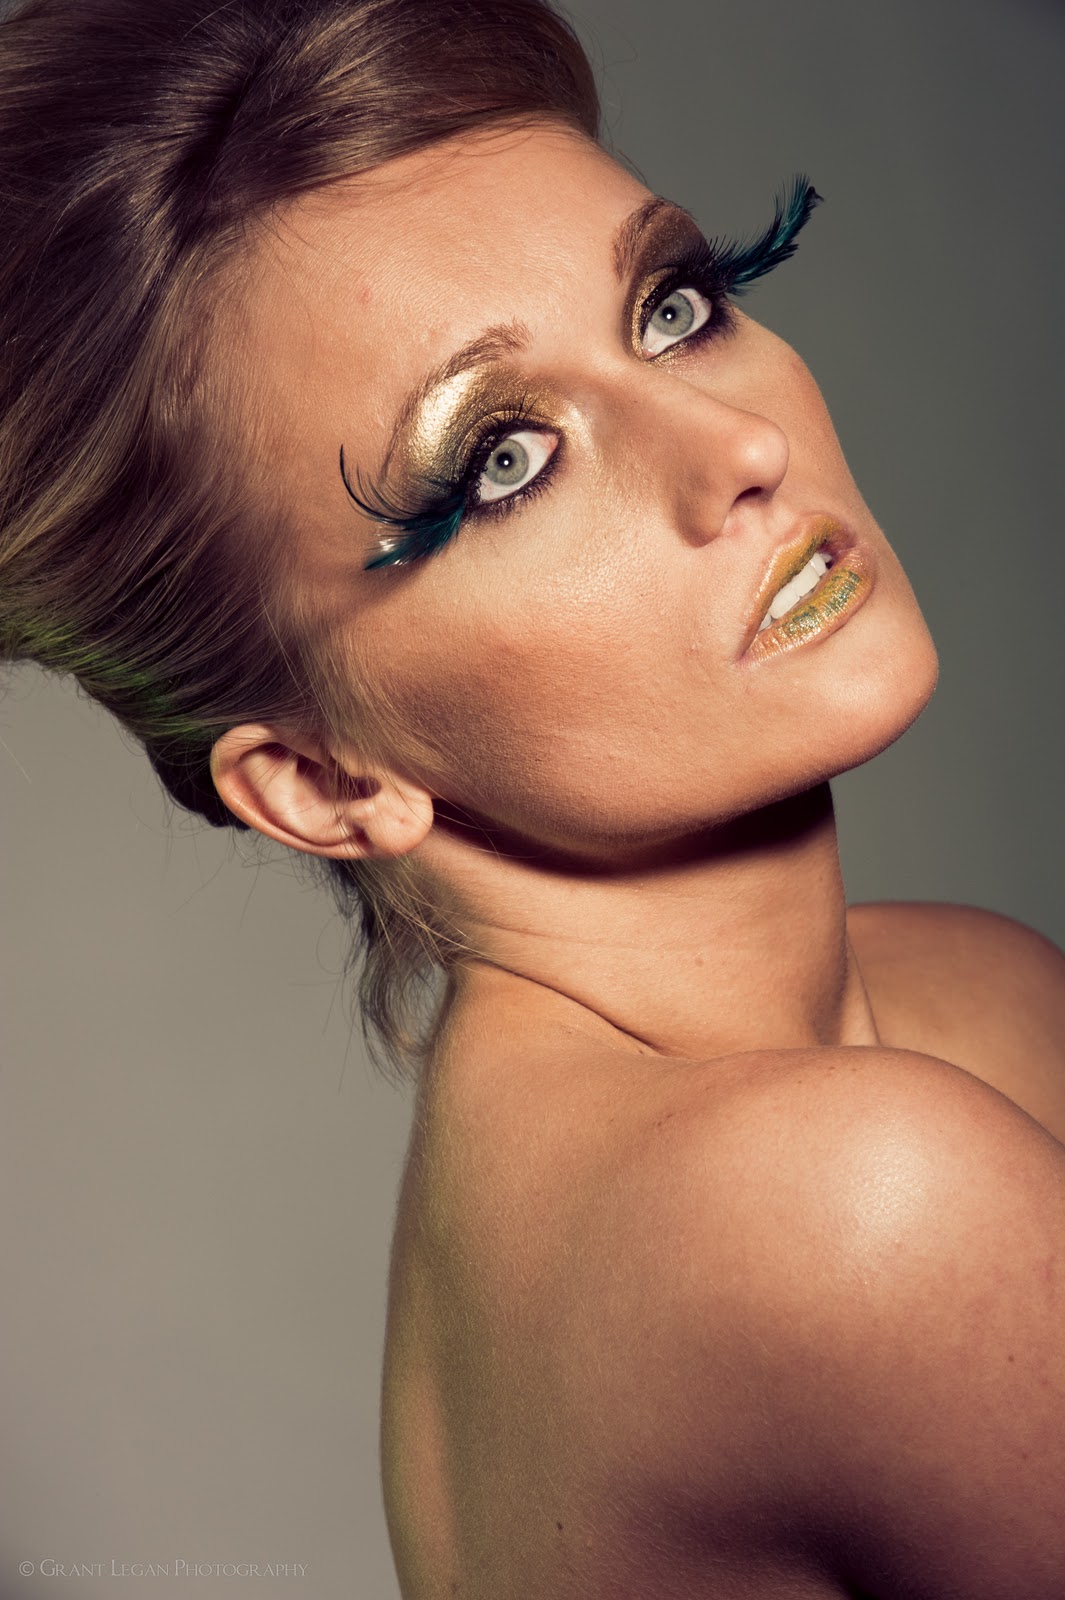 Grant Legan Photography: High Fashion Makeup